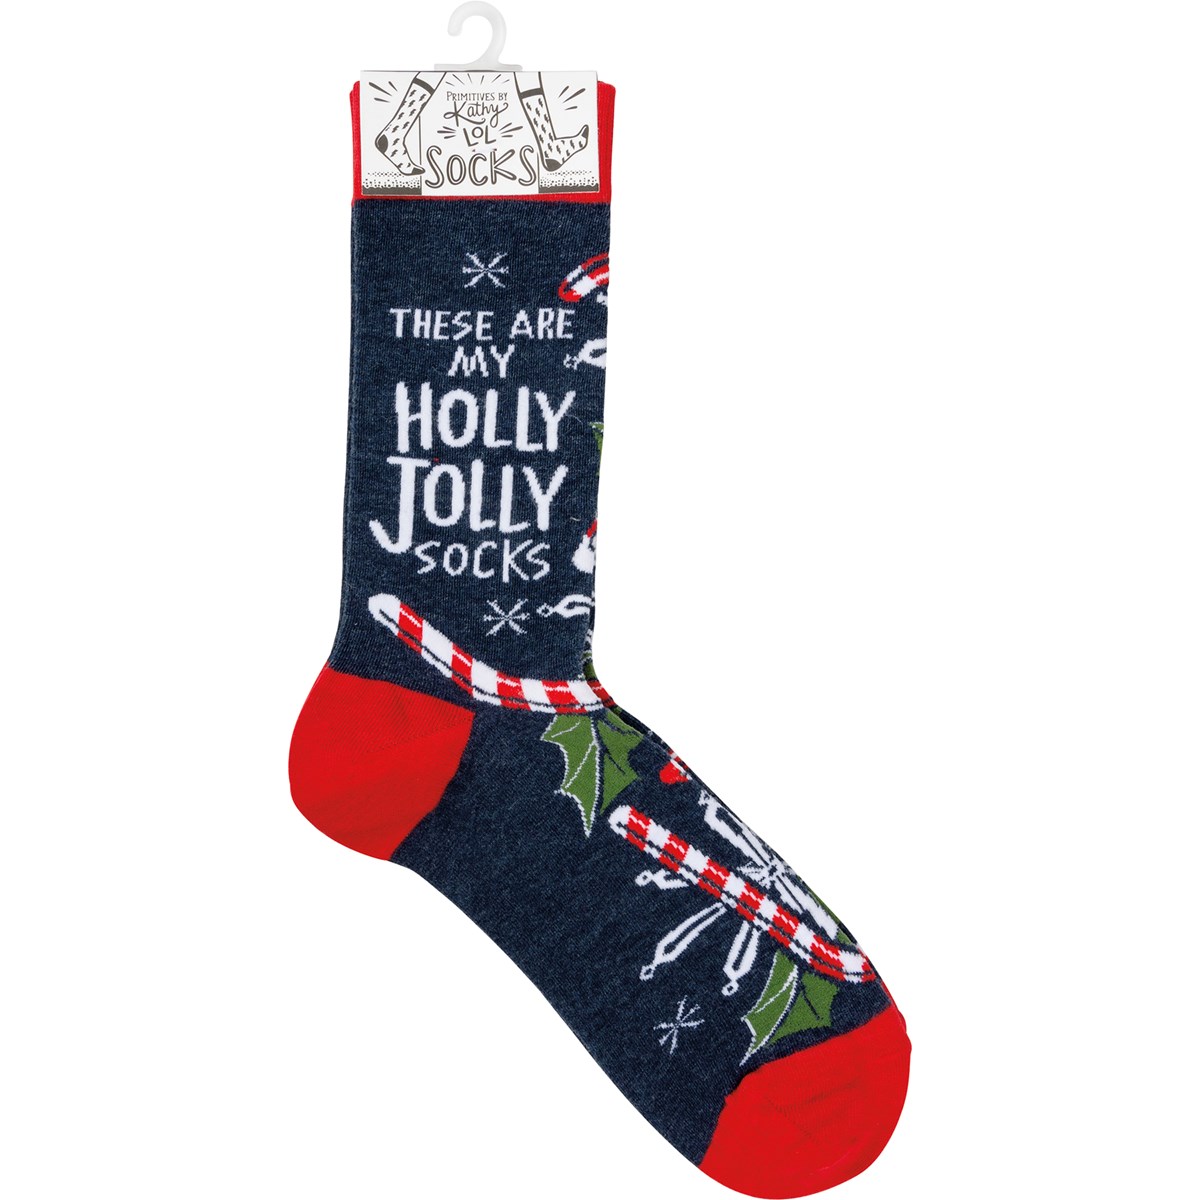 These Are My Holly Jolly Socks Socks - Cotton, Nylon, Spandex